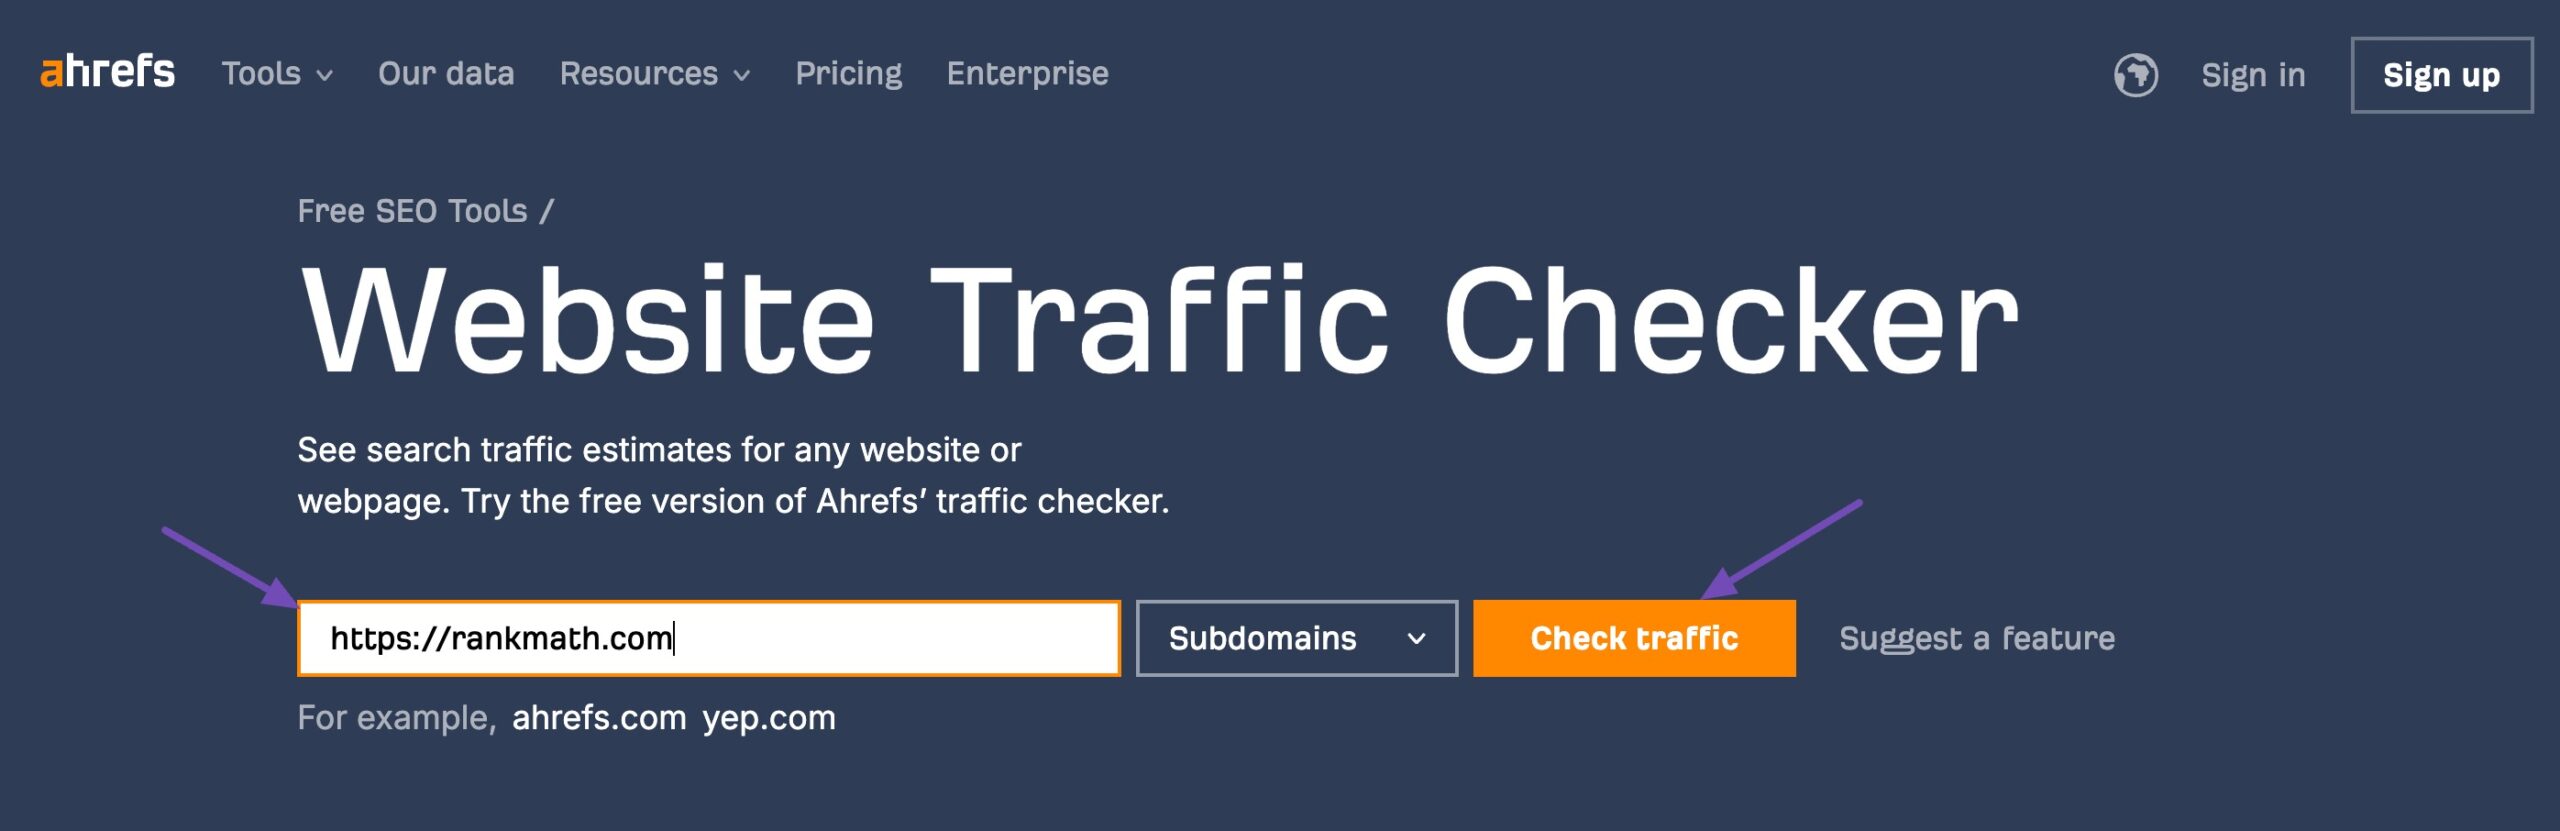 Ahrefs website traffic checker